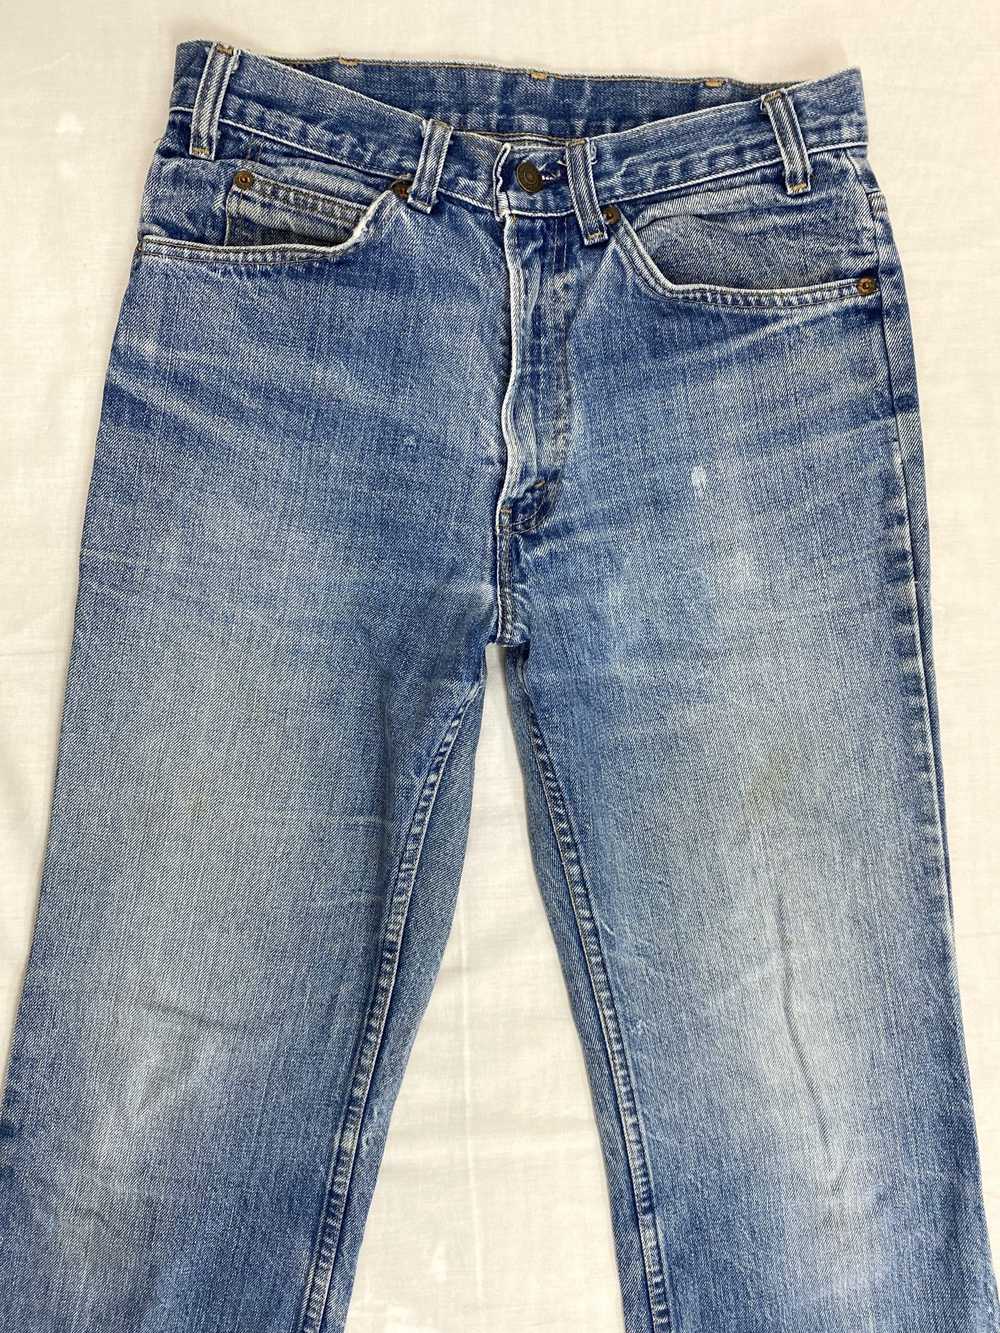 1970s Levi’s 517 jeans orange tab Talon zipper made i… - Gem